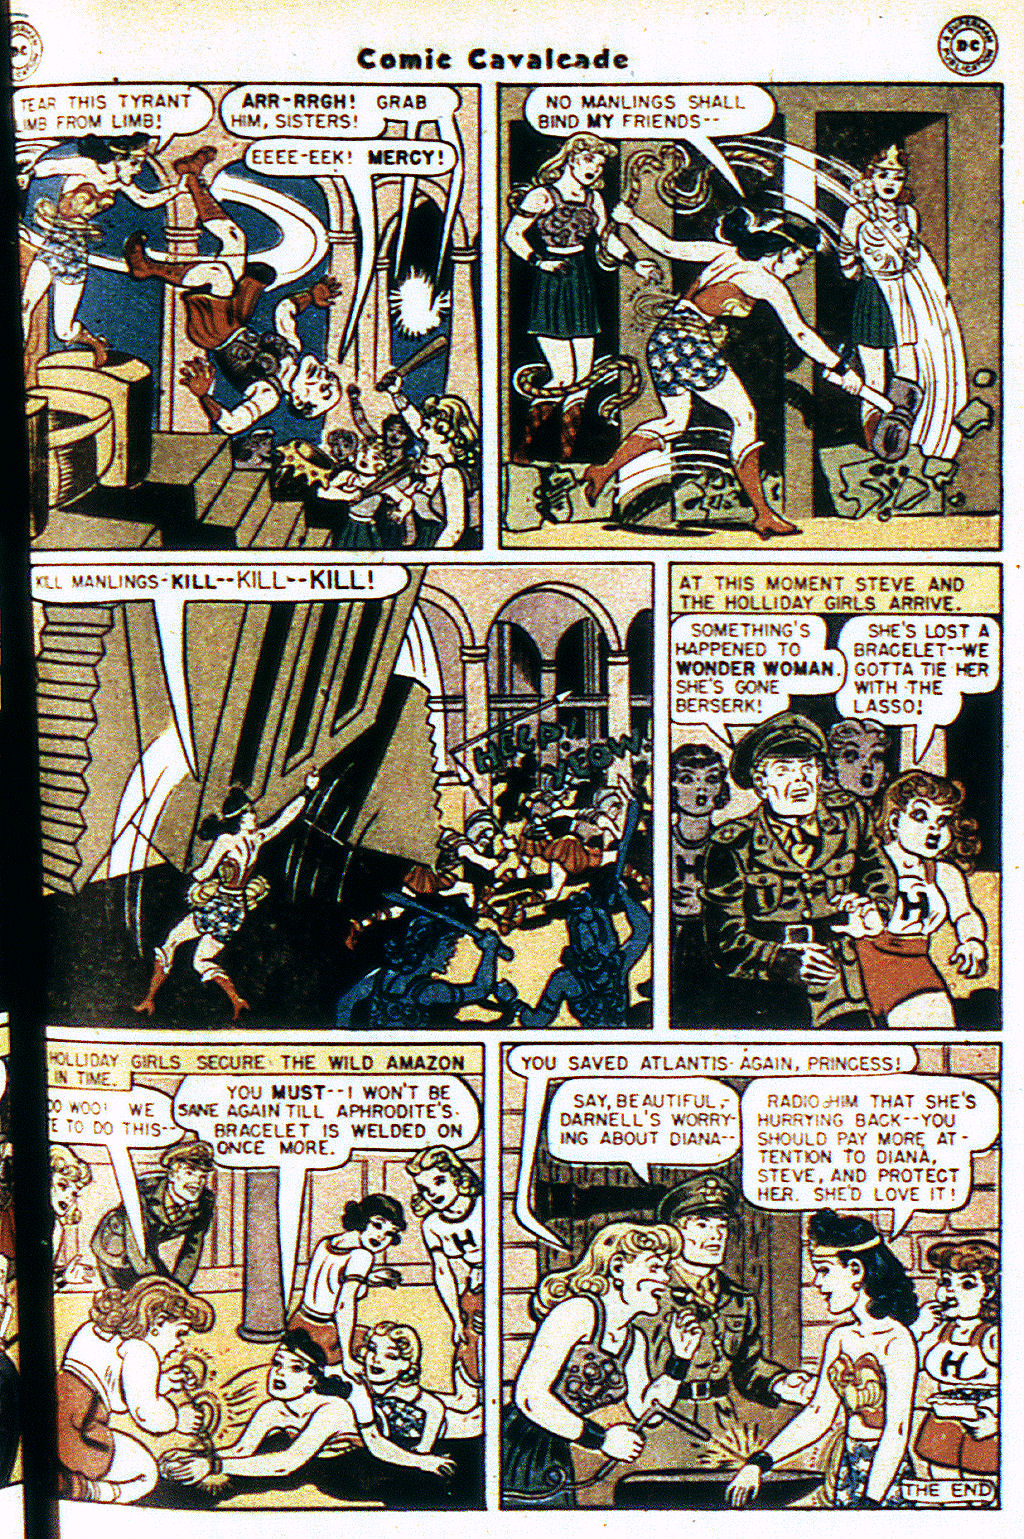 Comic Cavalcade issue 18 - Page 16